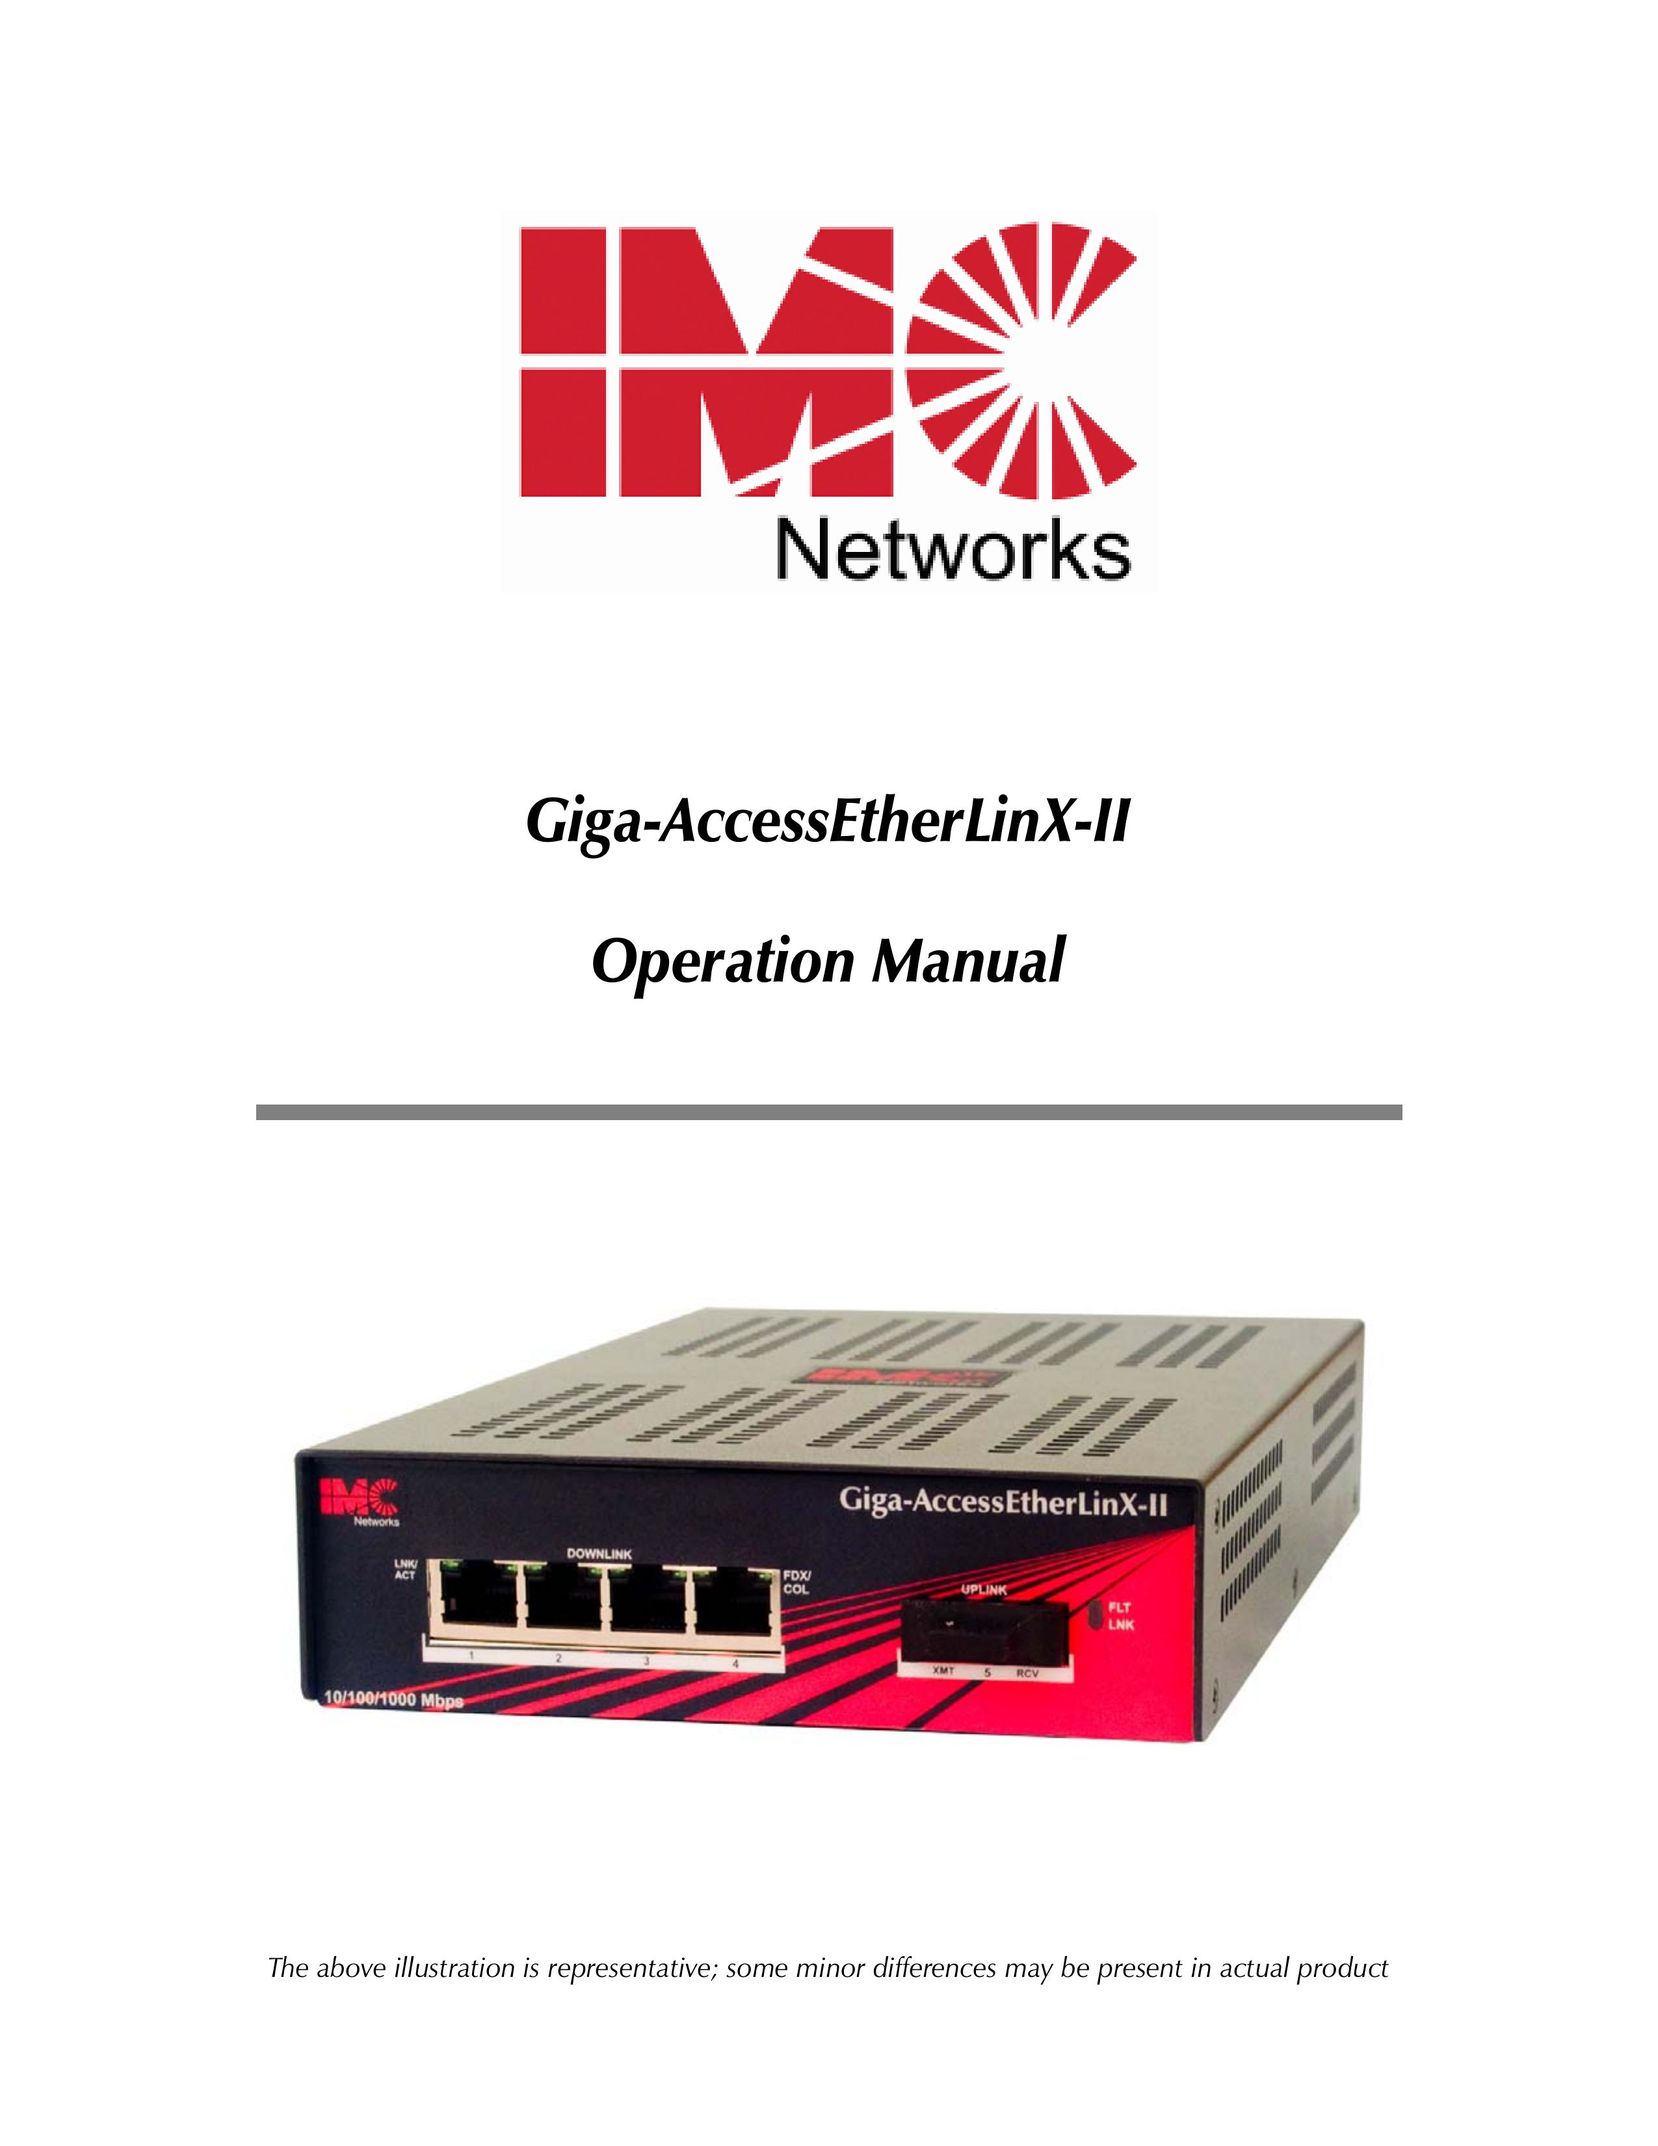 IMC Networks Giga-AcessEtherLinx-II Switch User Manual